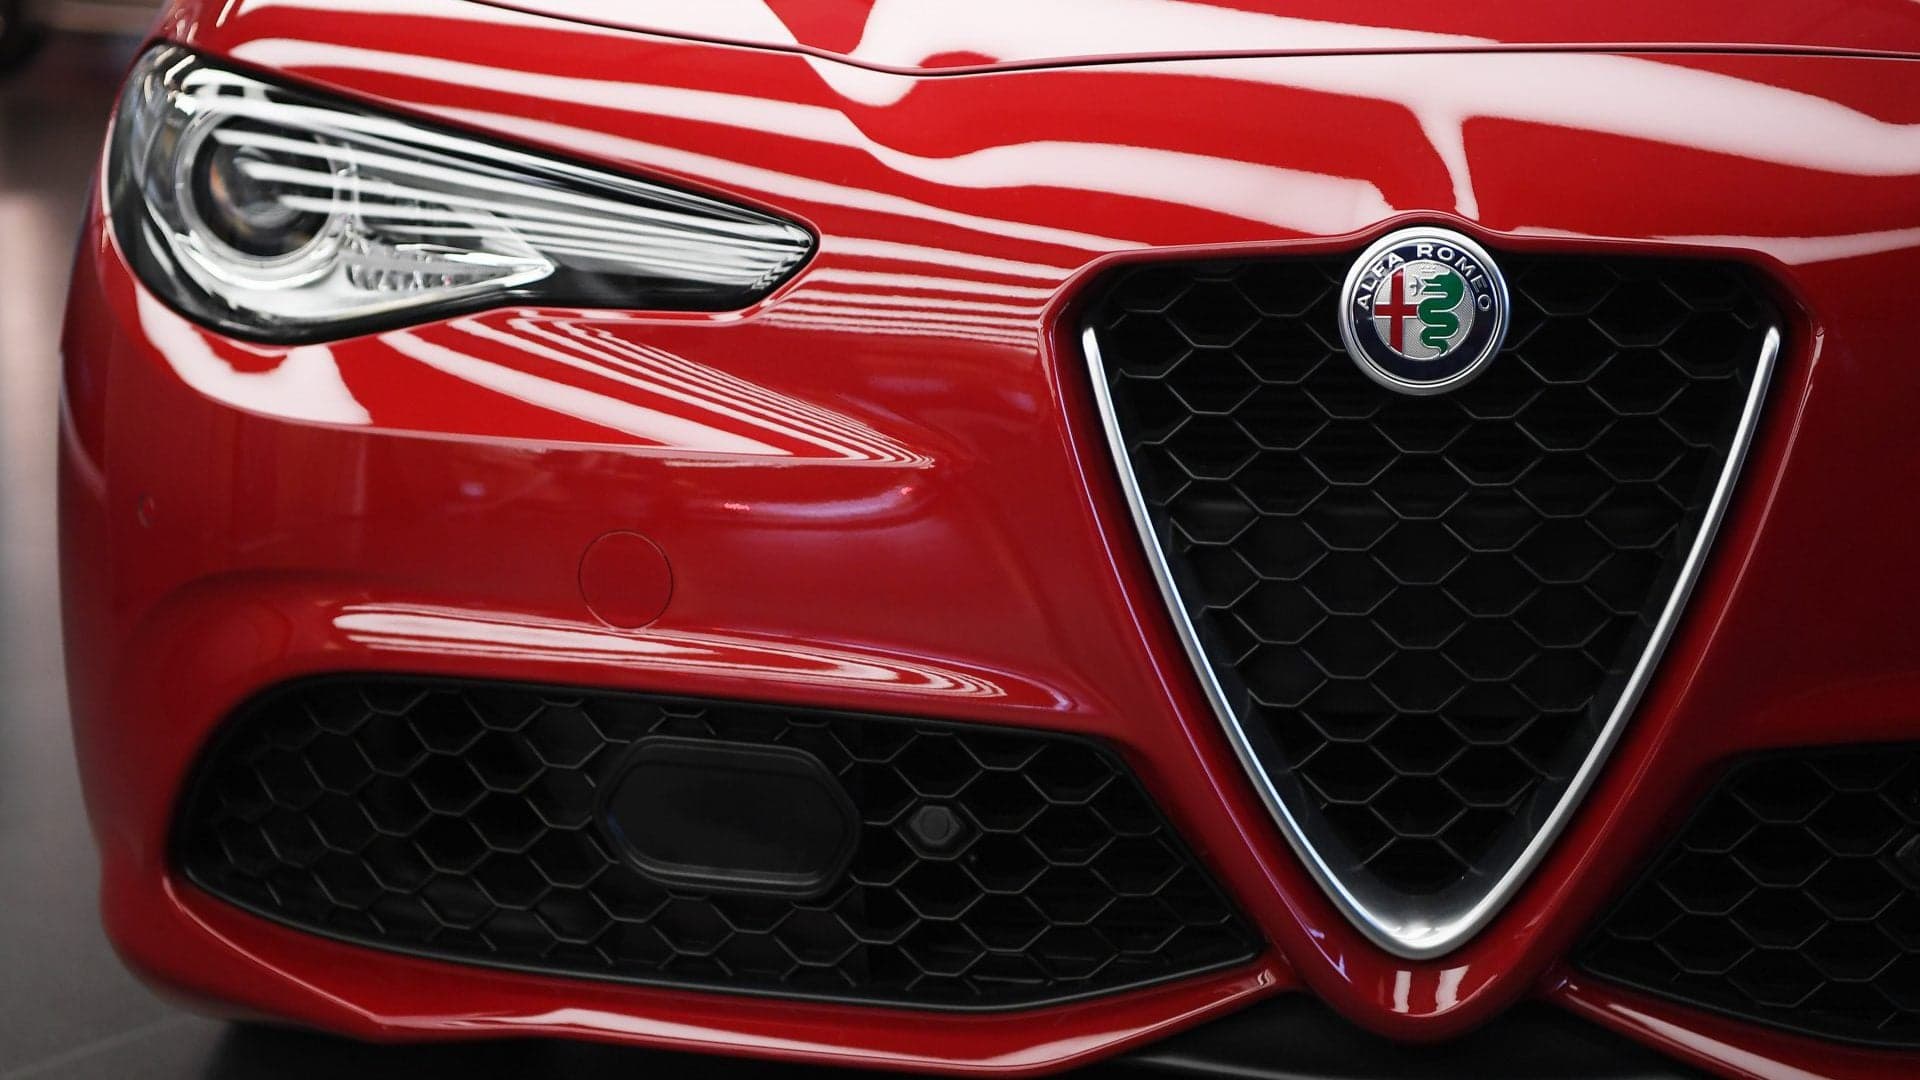 Alfa Romeo Confirms New 700-HP 8C Supercar and GTV Coupe